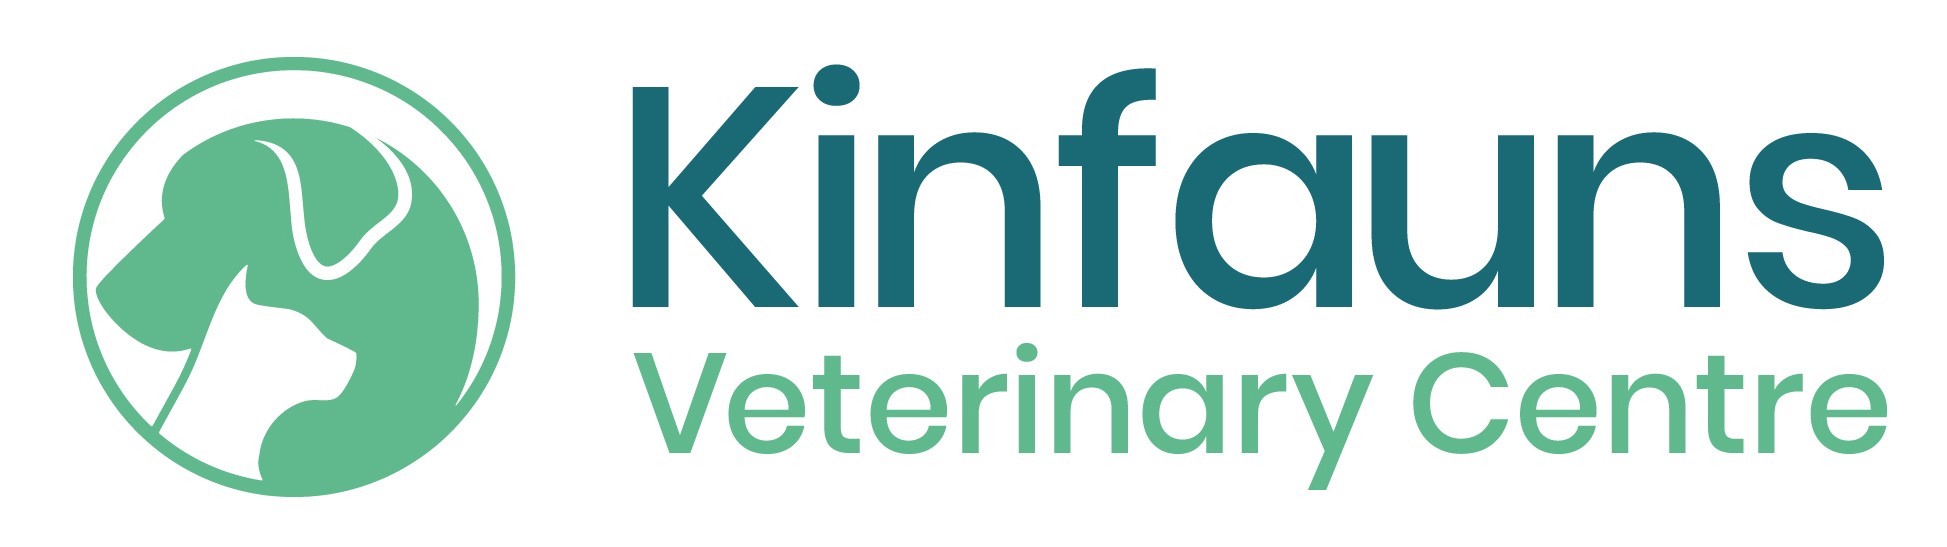 Kinfauns Veterinary Centre